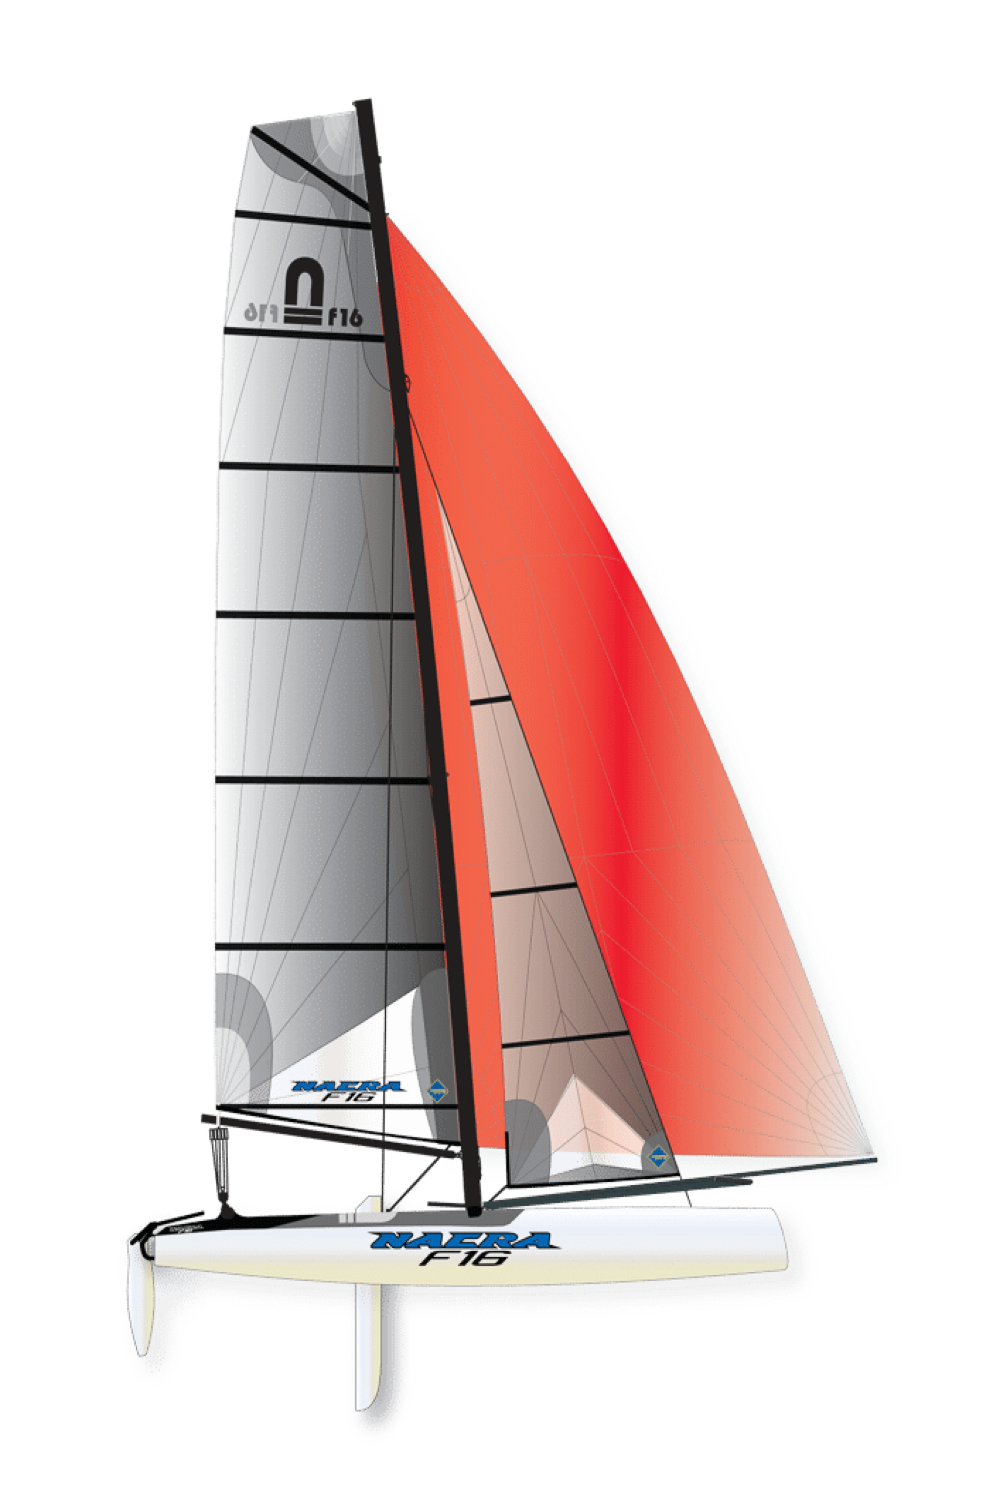 f16 catamaran class rules